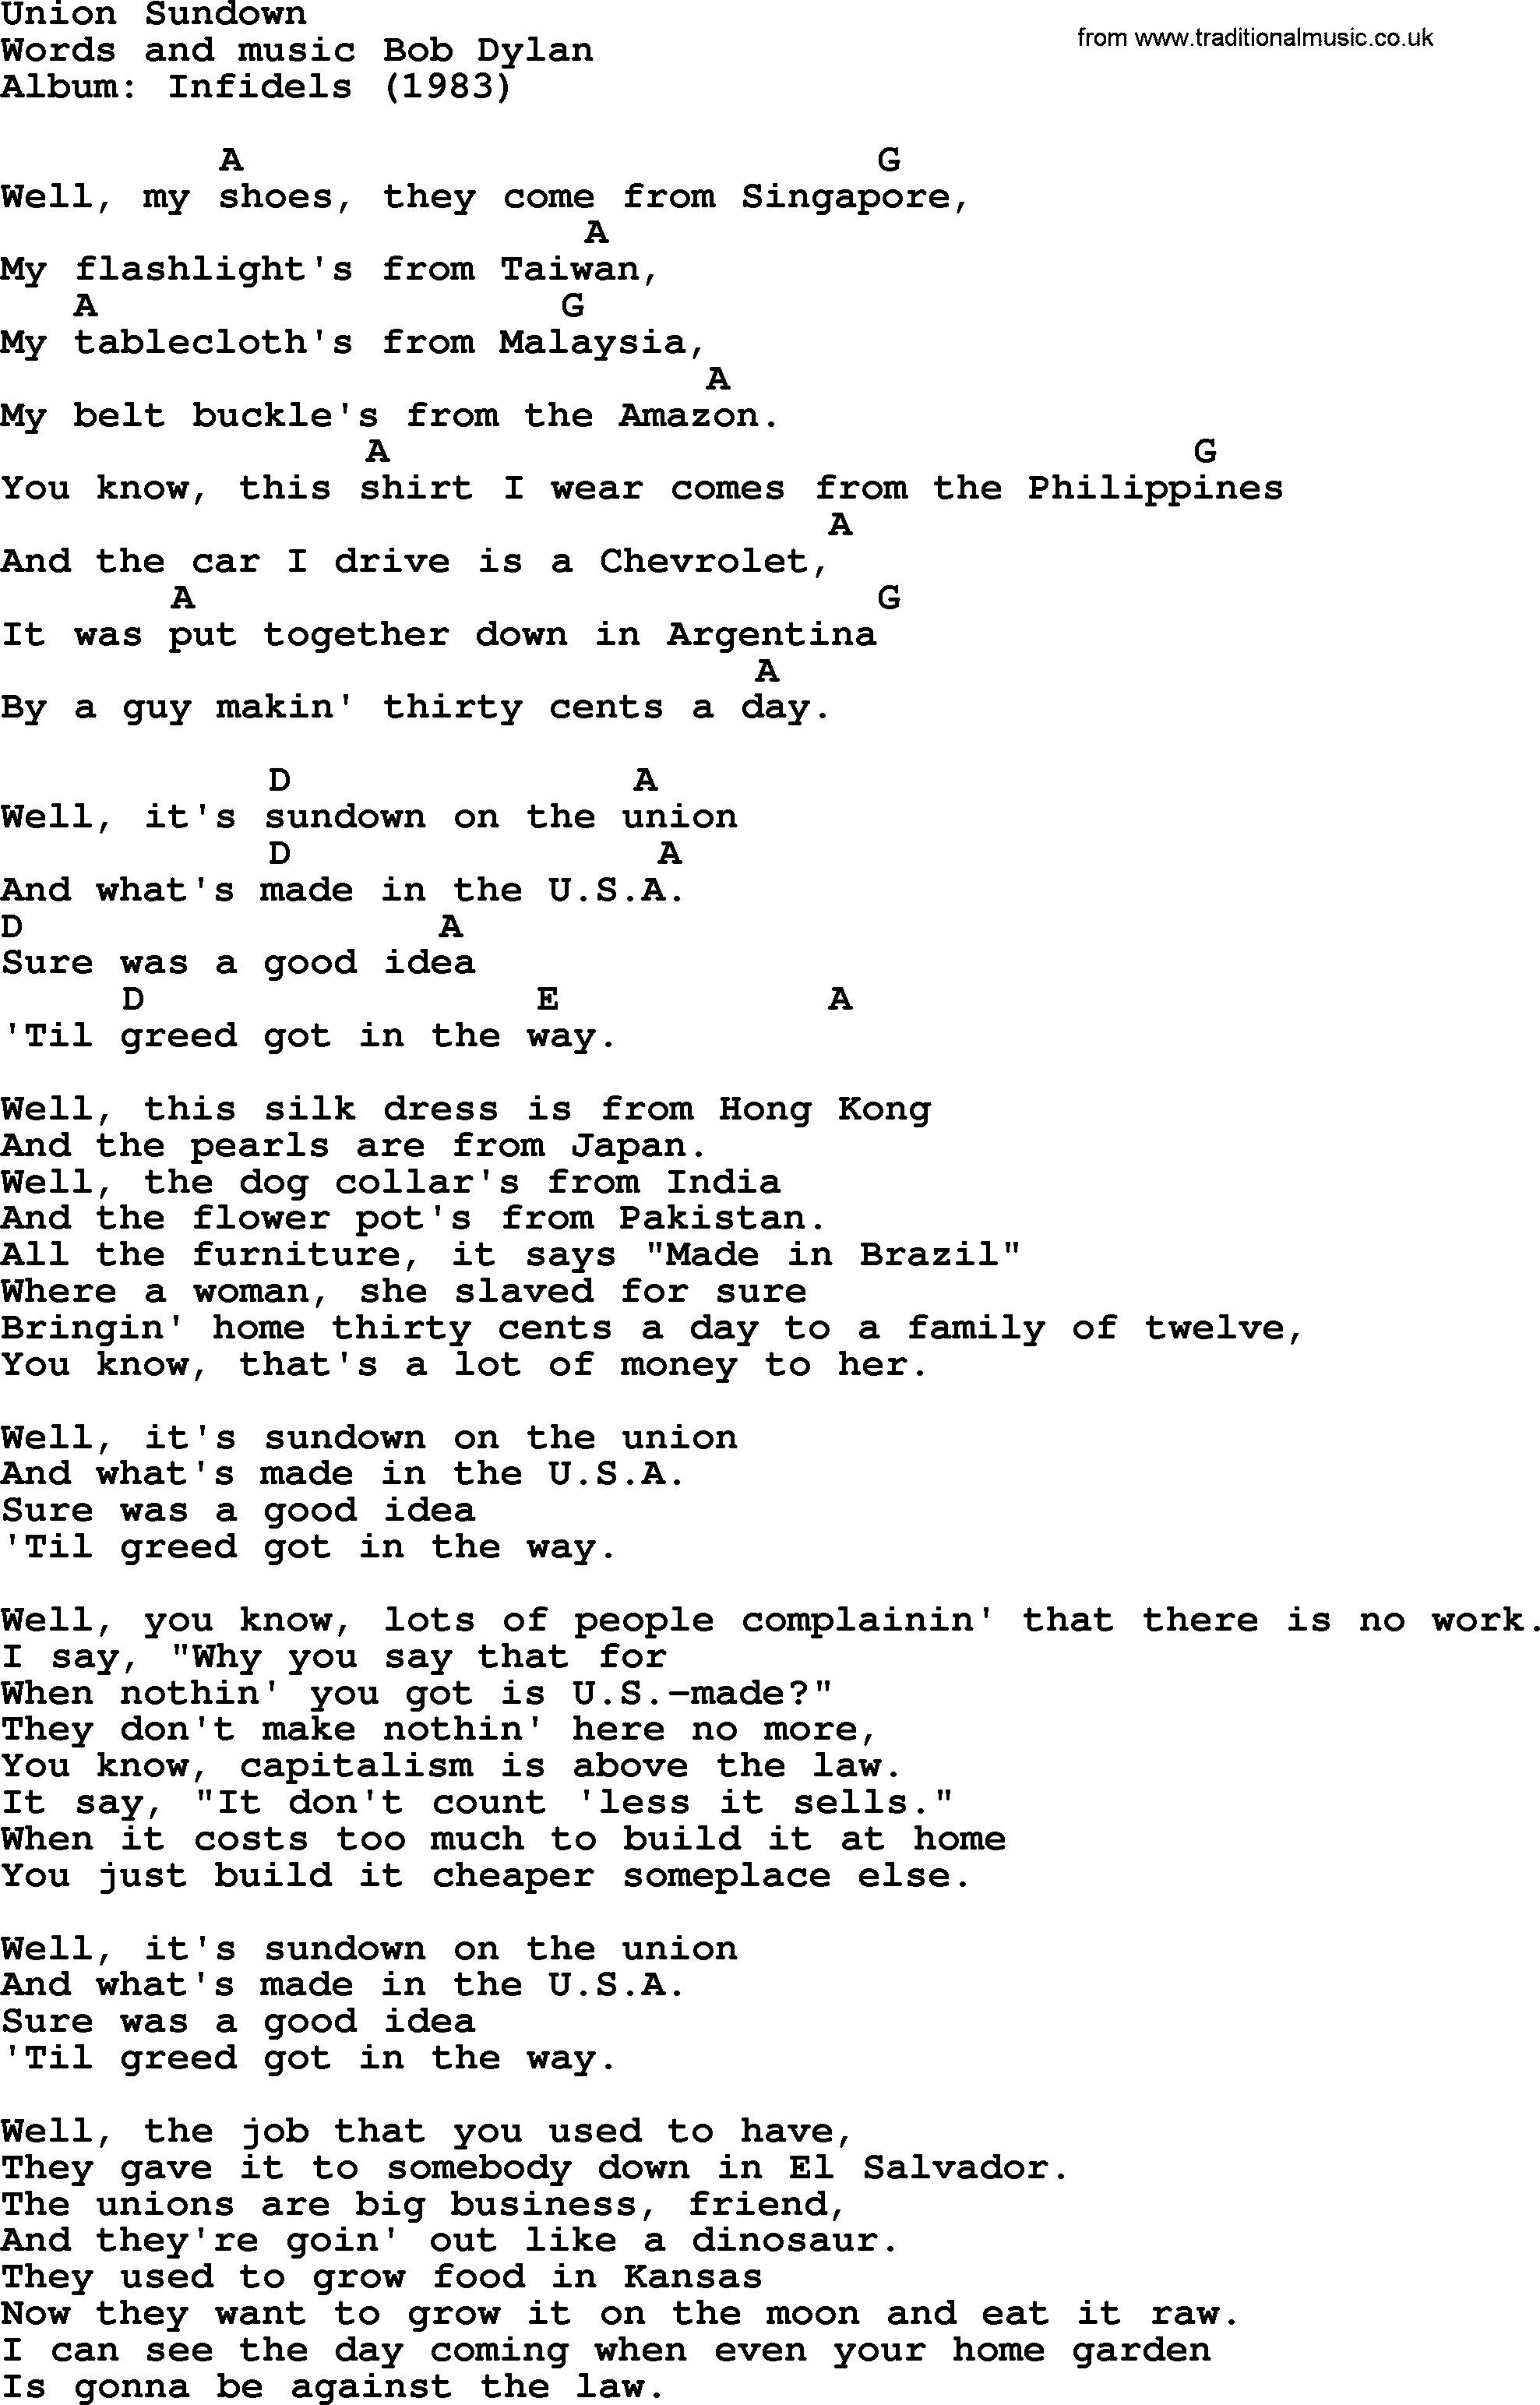 Bob Dylan song, lyrics with chords - Union Sundown